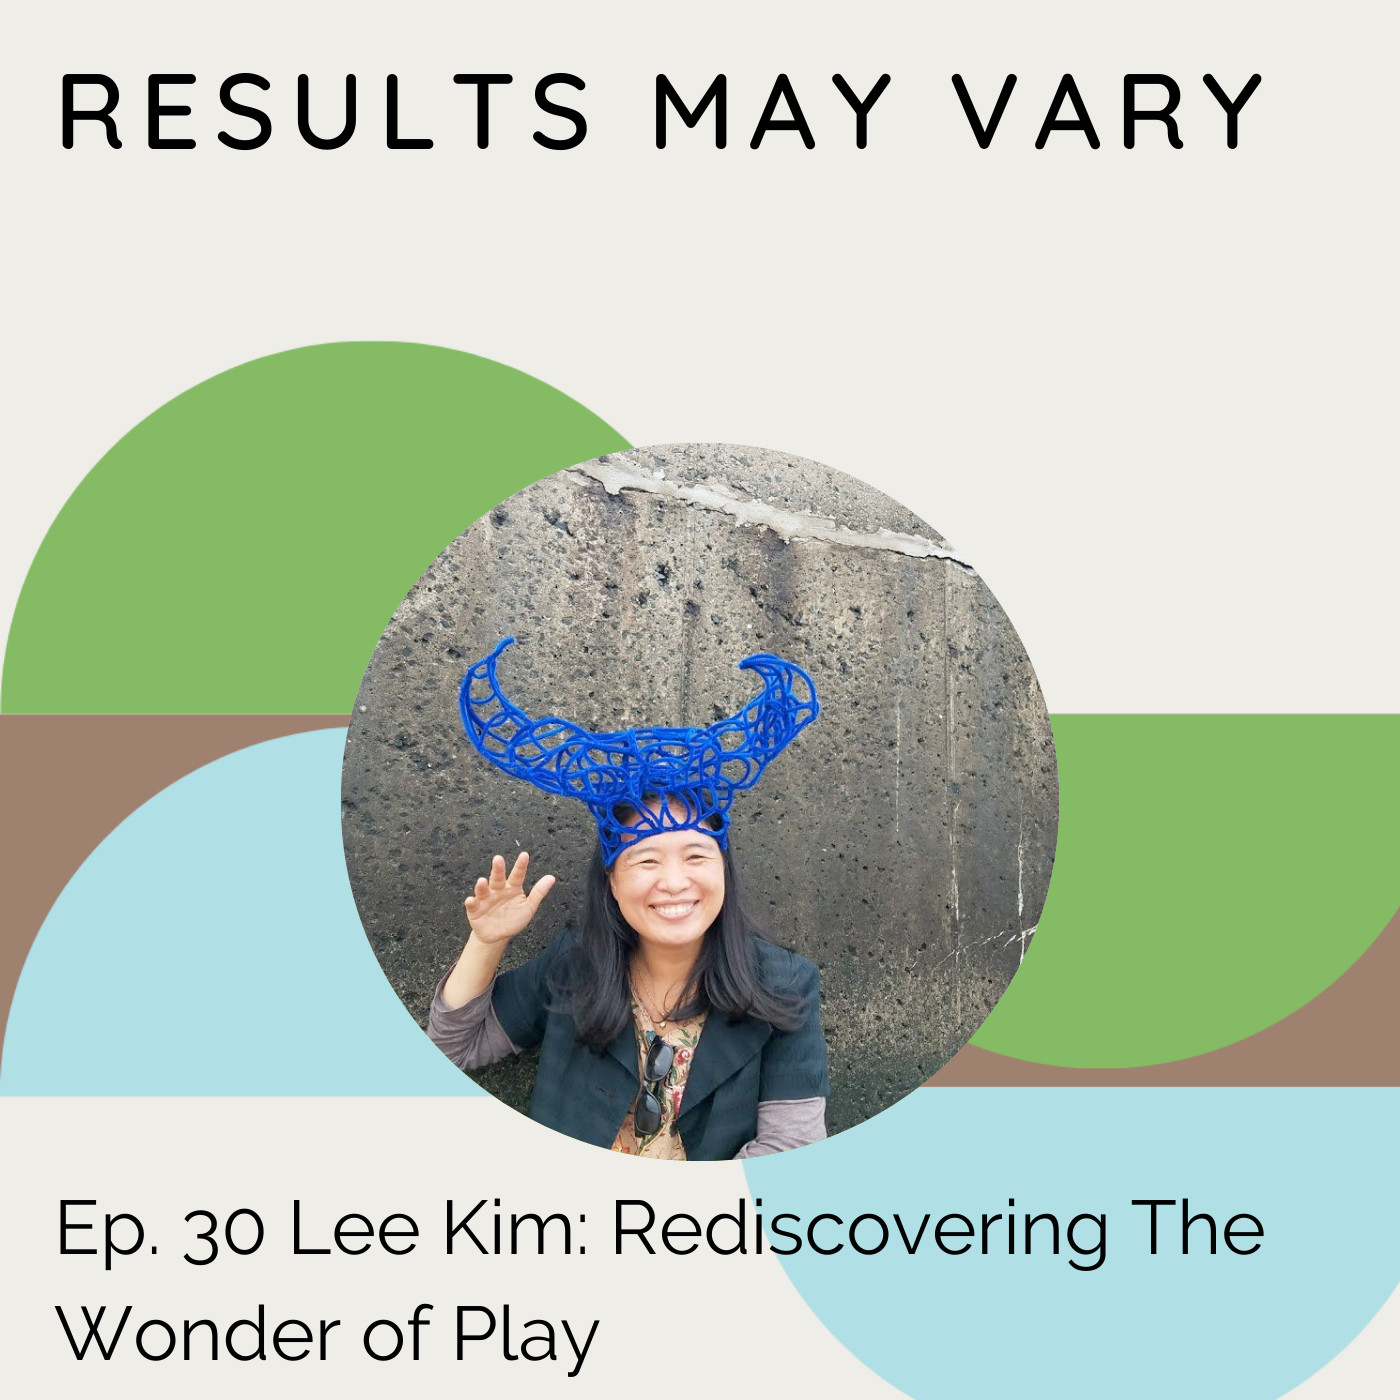 RMV 30 Lee Kim: Rediscovering The Wonder of Play